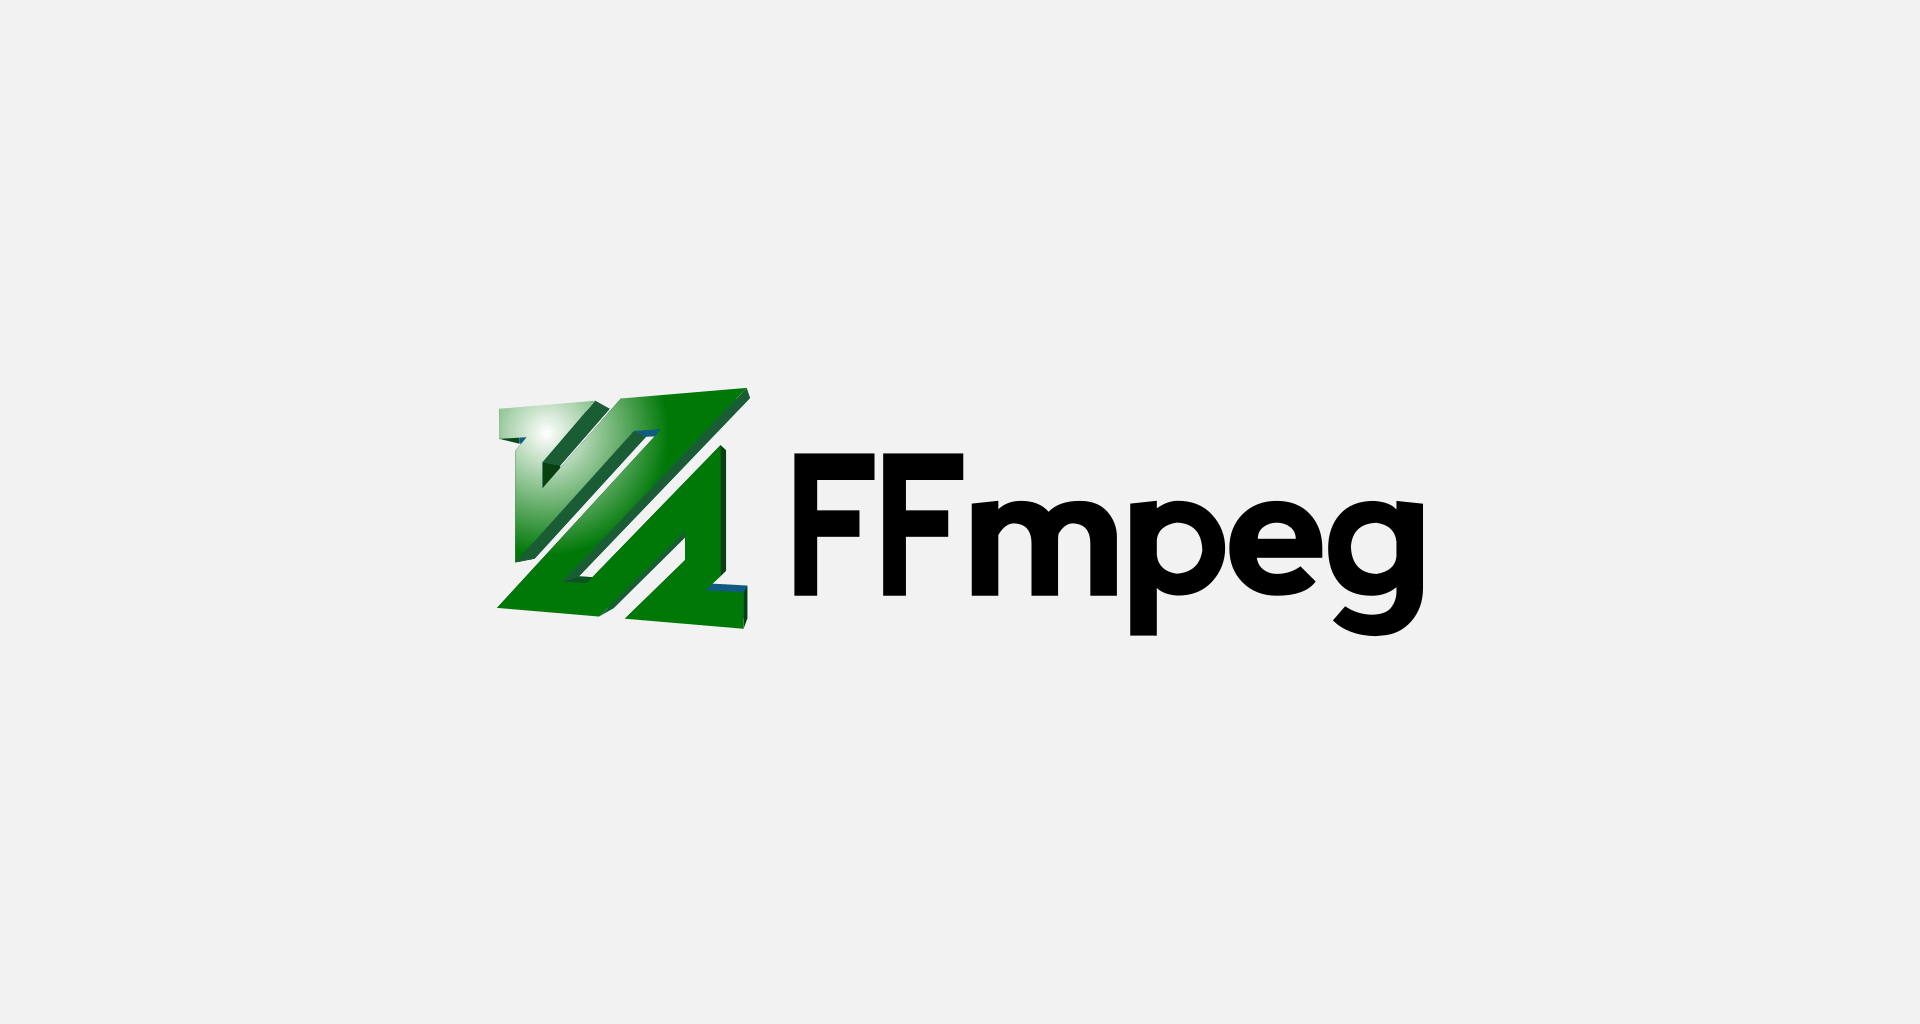 ffmpeg yüksek çözünürlüklü logo, ffmpeg svg logo, ffmpeg logo